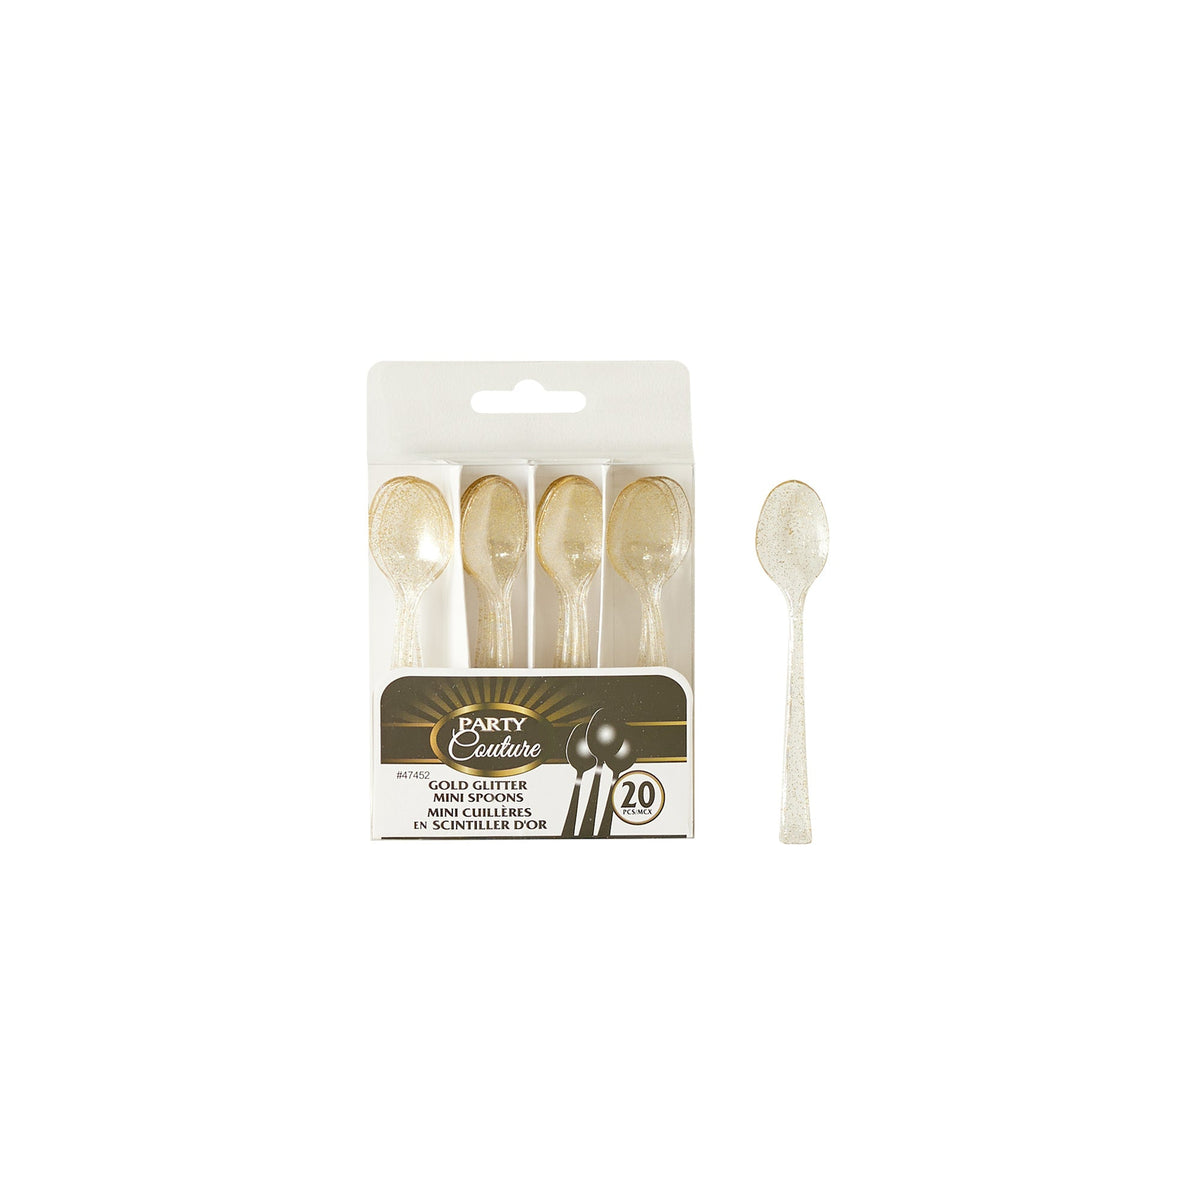 MADISON IMPORTS Disposable-Plasticware Gold Glitter Premium Quality Mini Spoons, 20 Count 775310474529